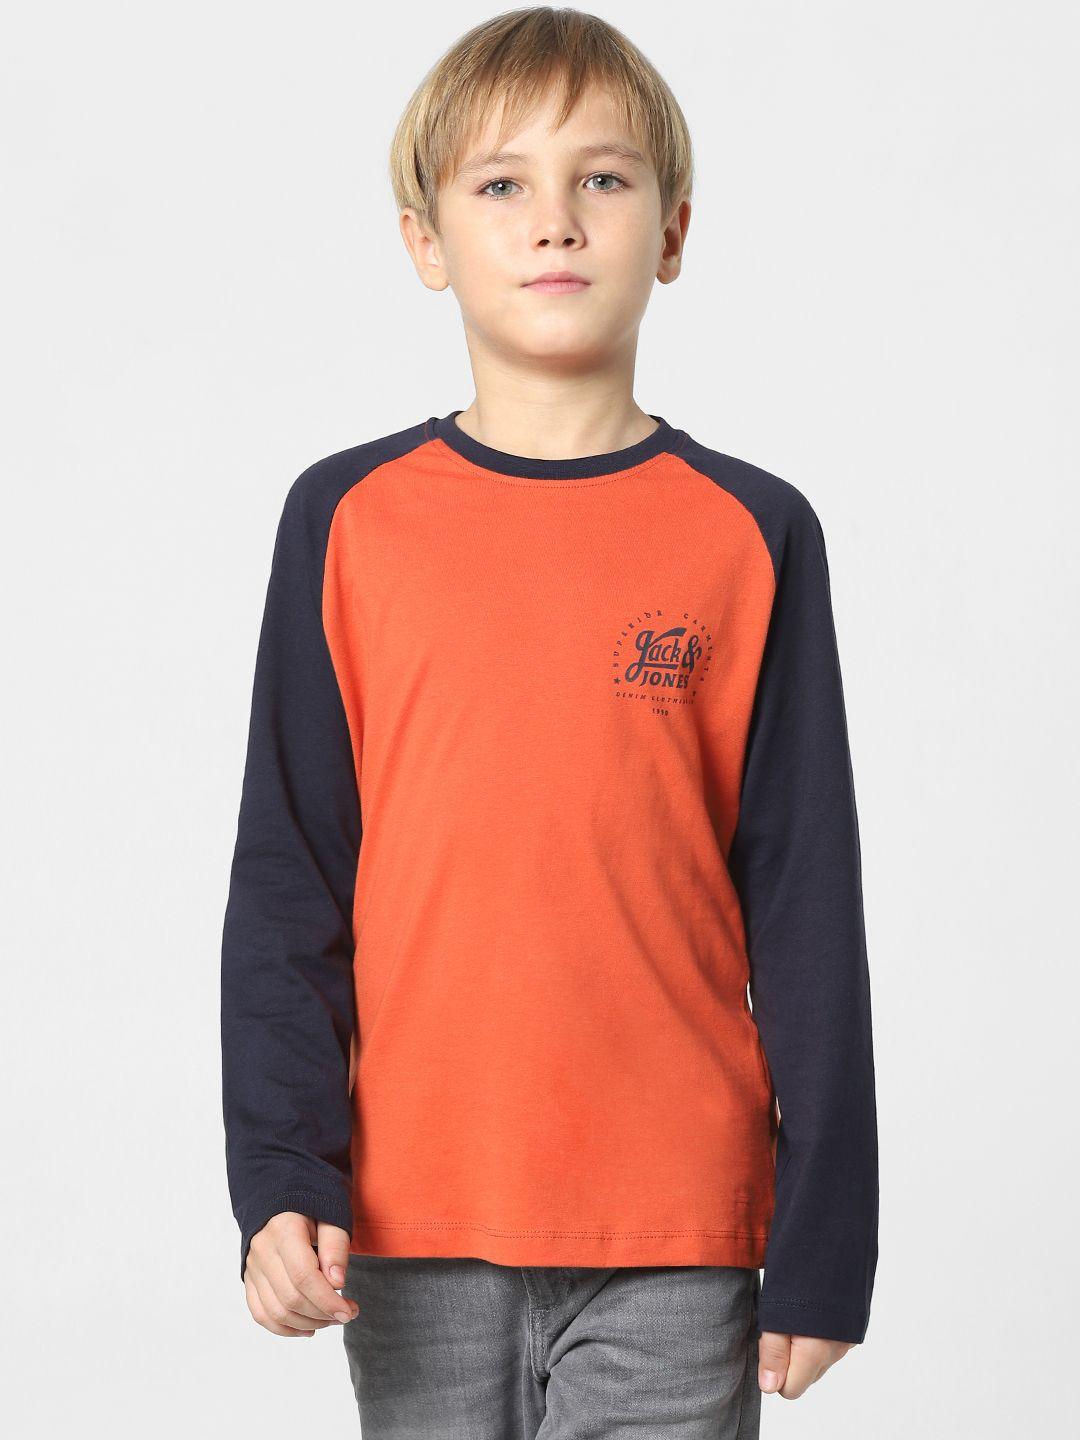 jack & jones junior boys orange & navy blue colourblocked slim fit t-shirt